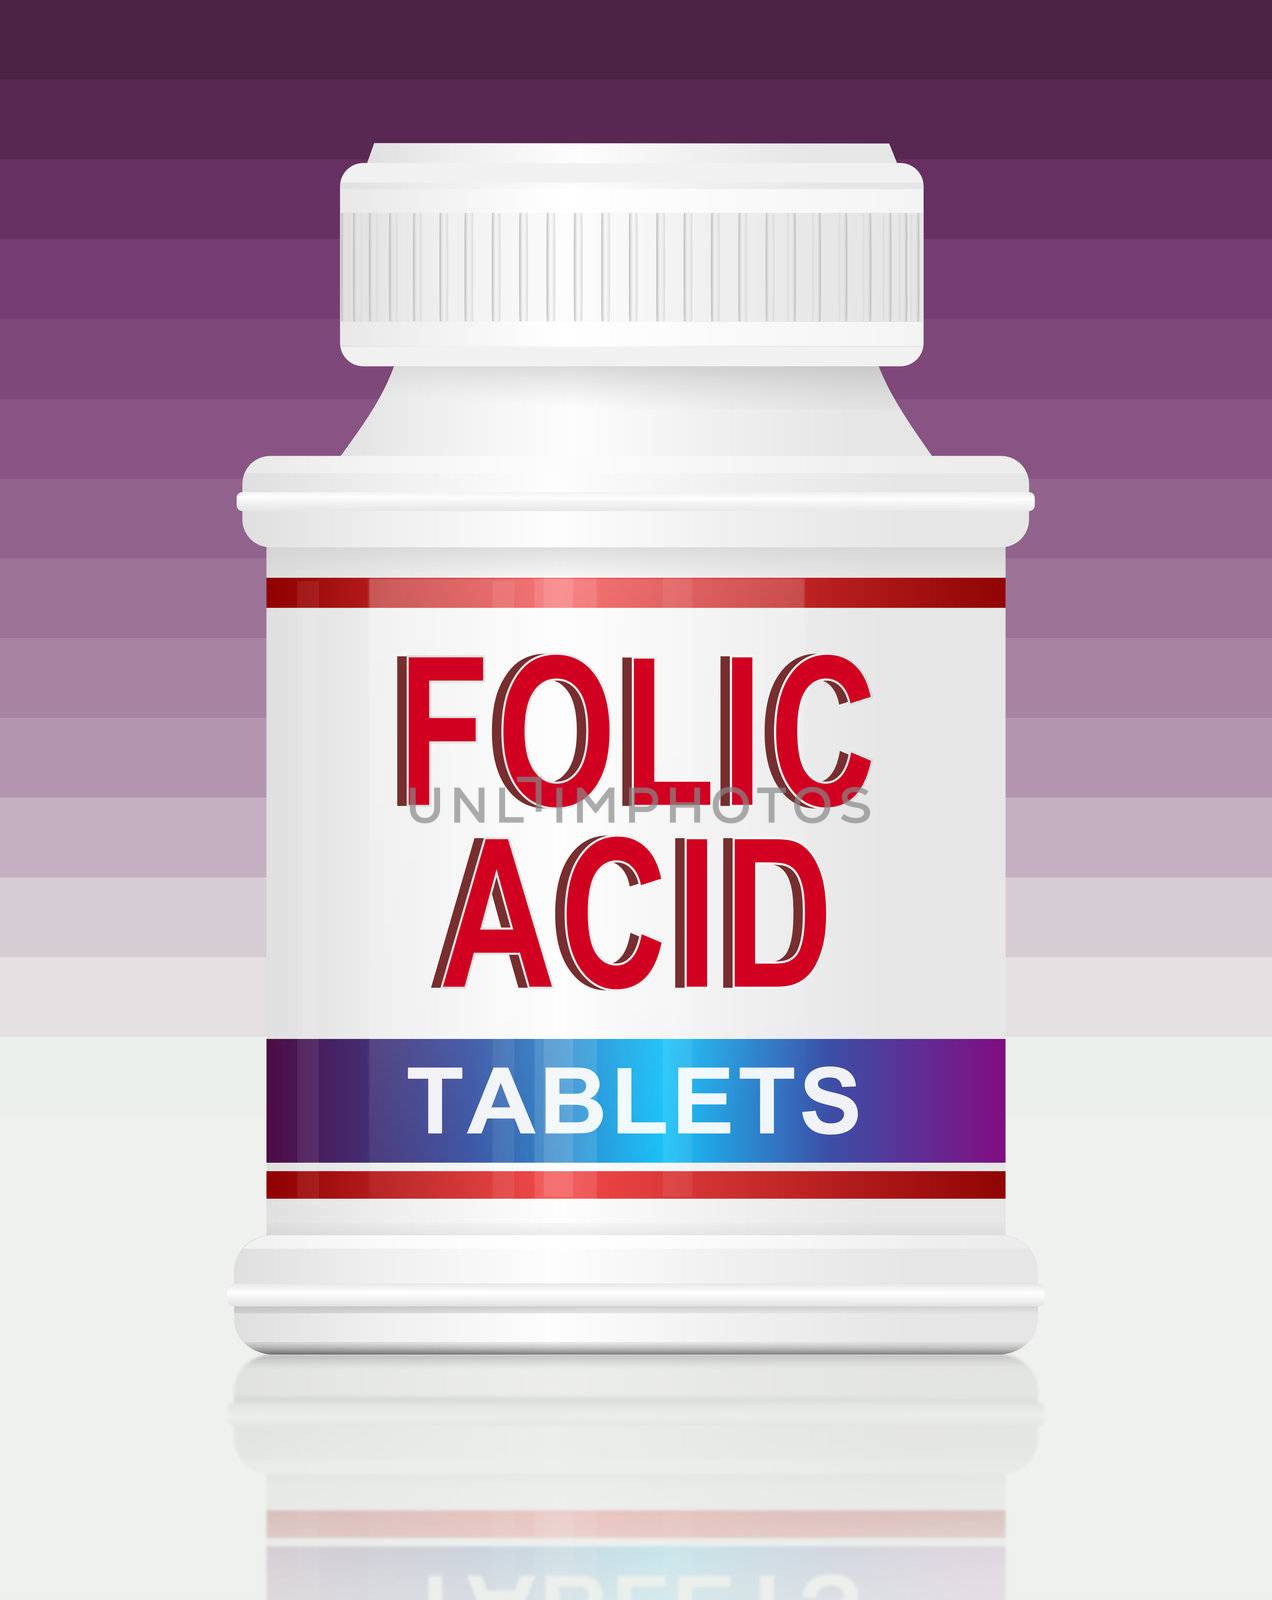 Folic acid. by 72soul